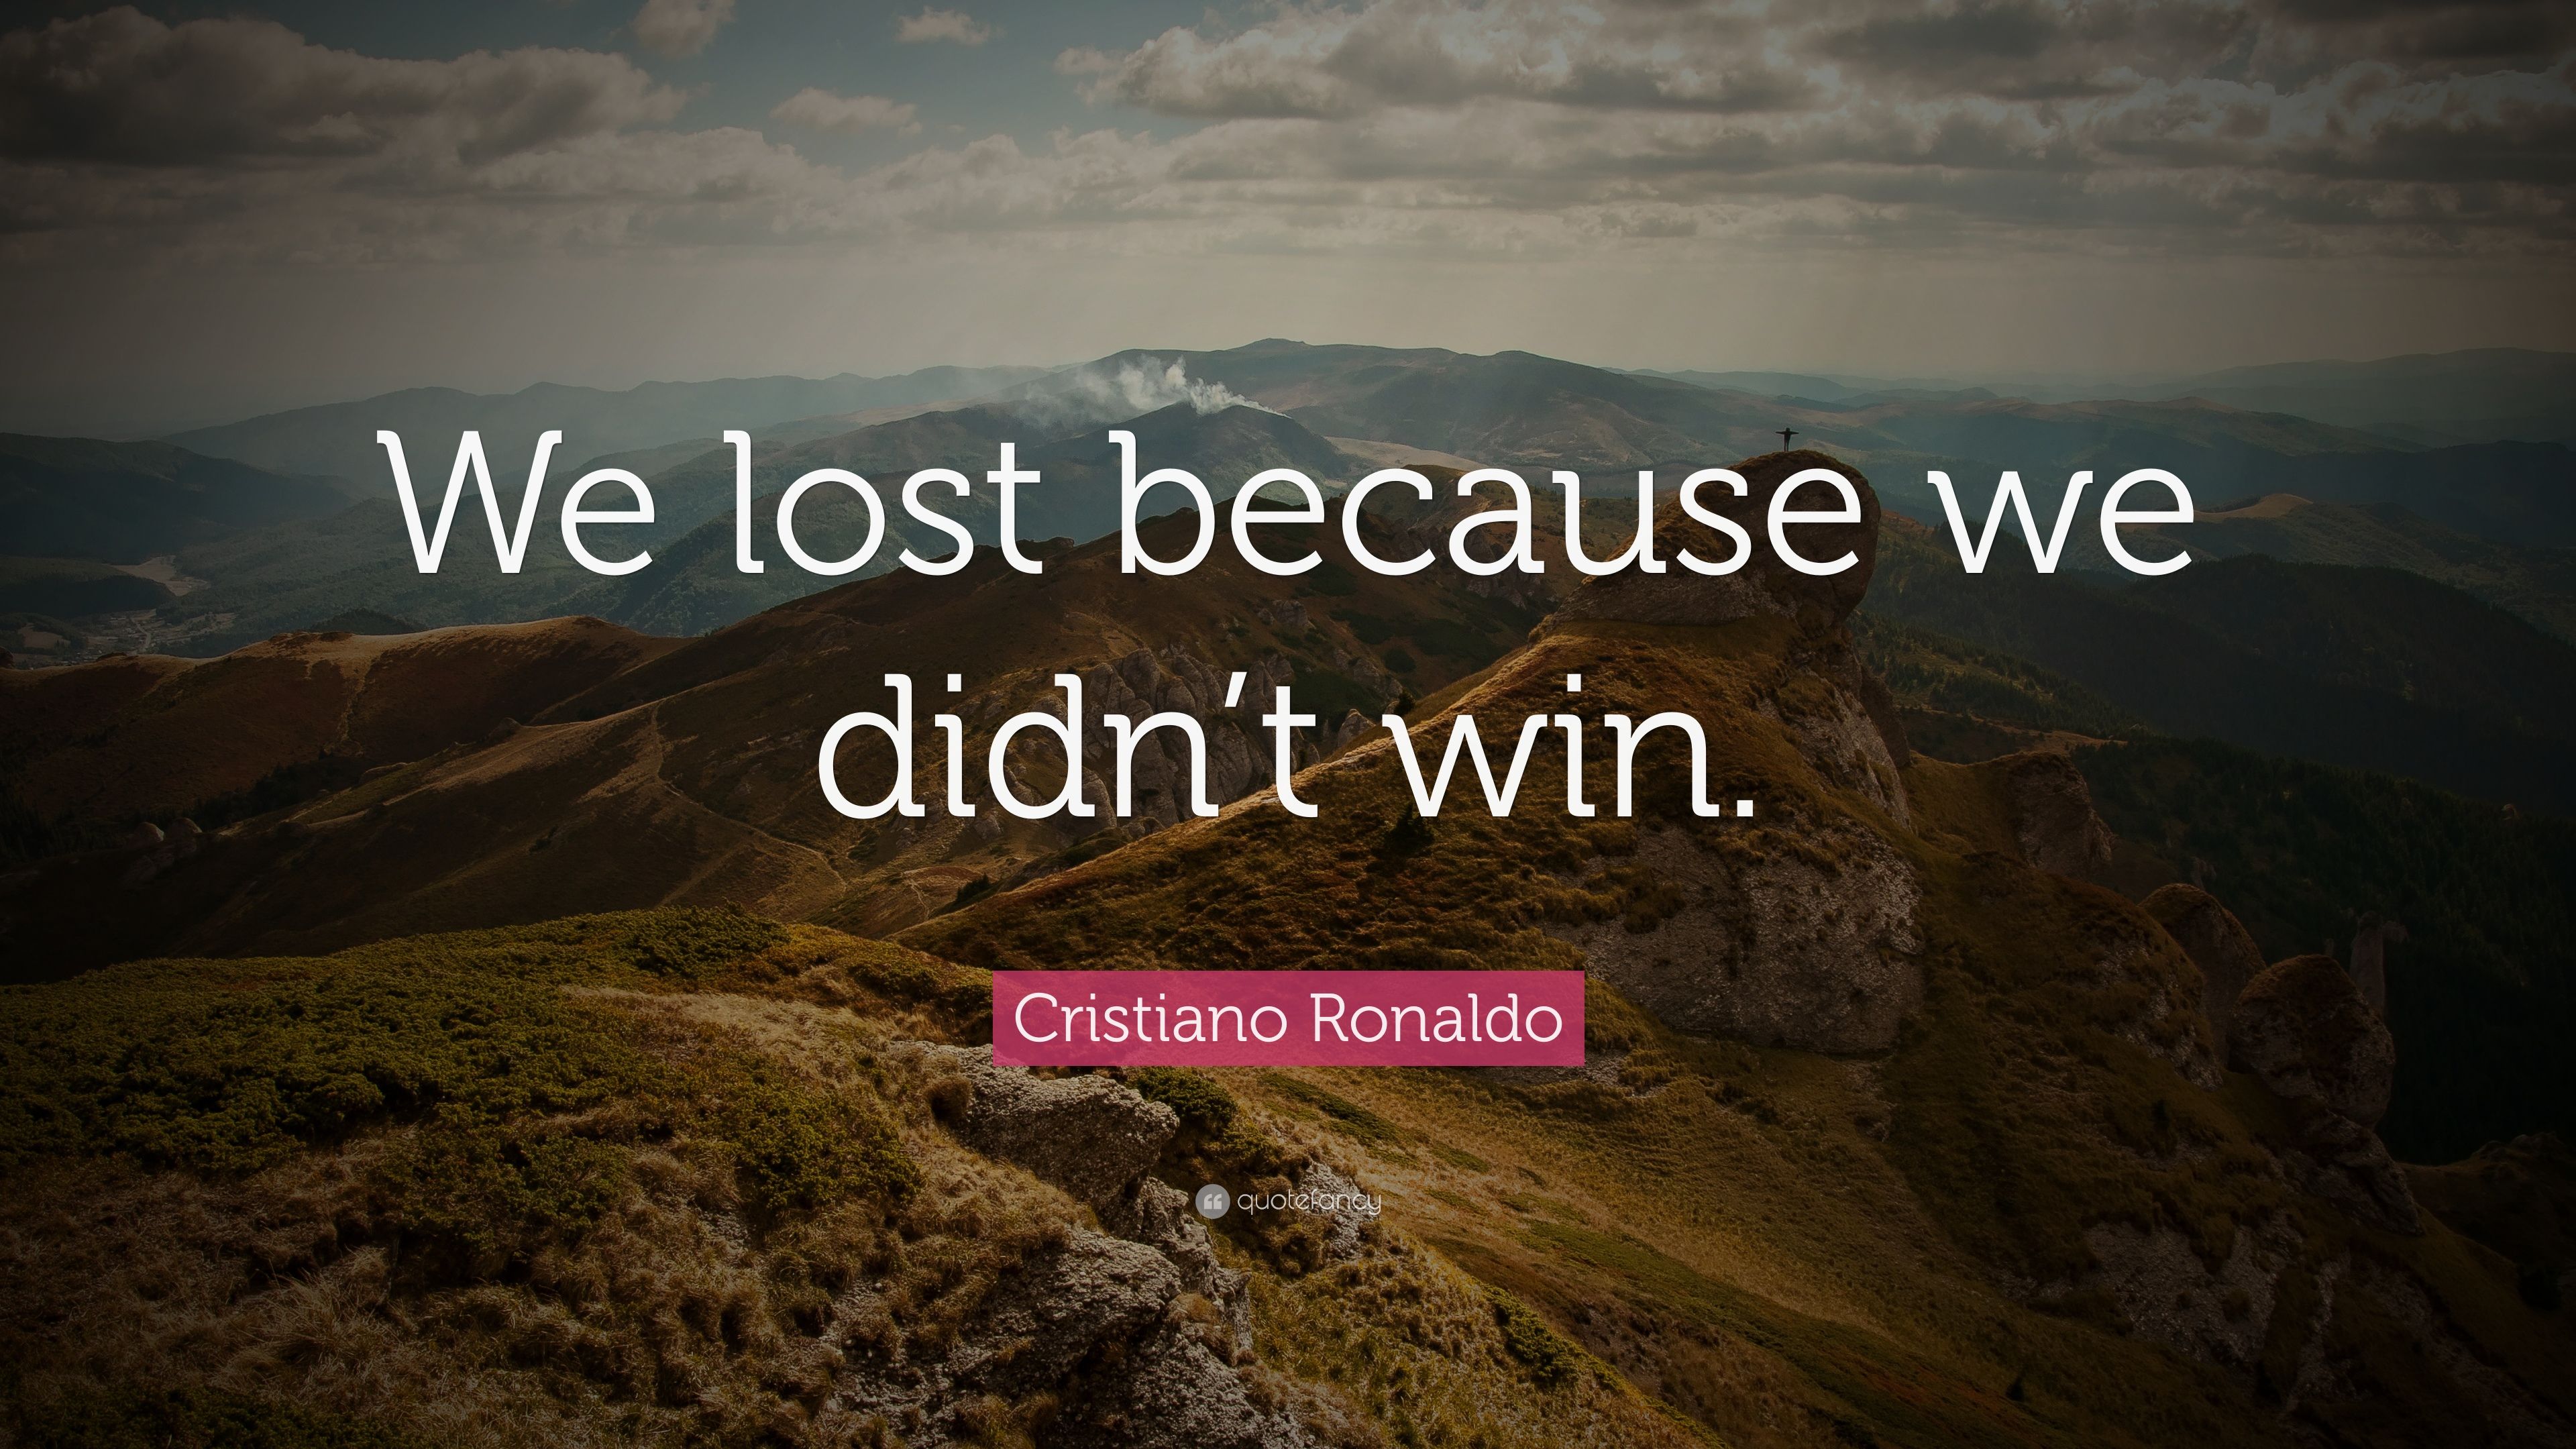 Cristiano Ronaldo Quote: “We lost because we didn't win.”